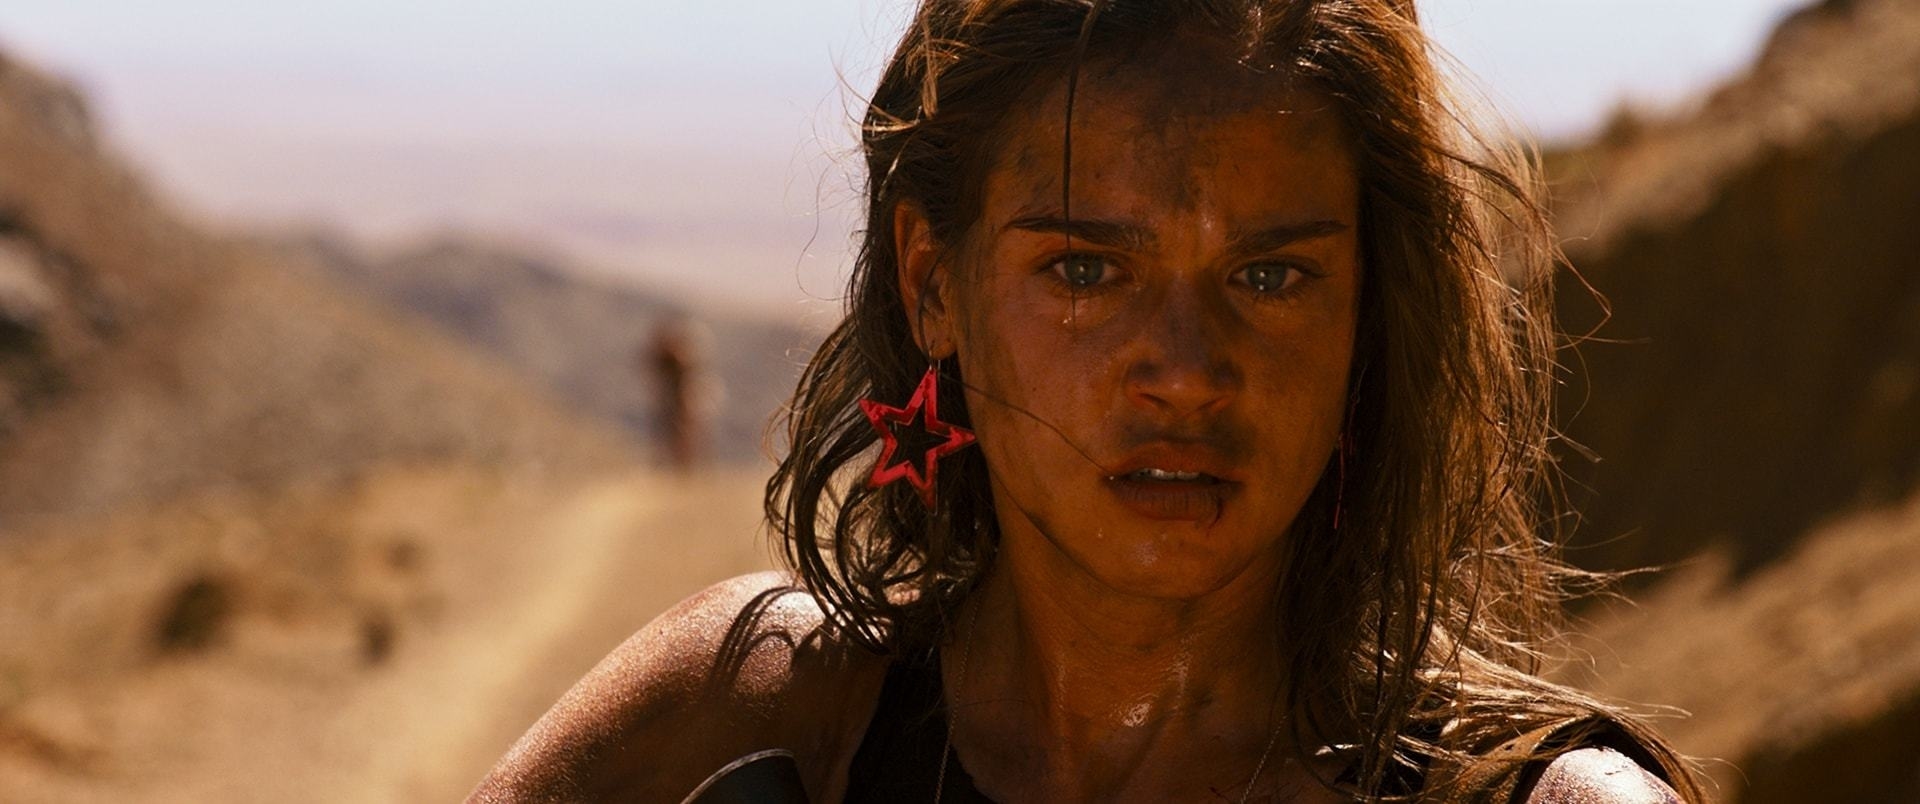 Matilda Lutz wearing pink star-shaped earrings in the desert.